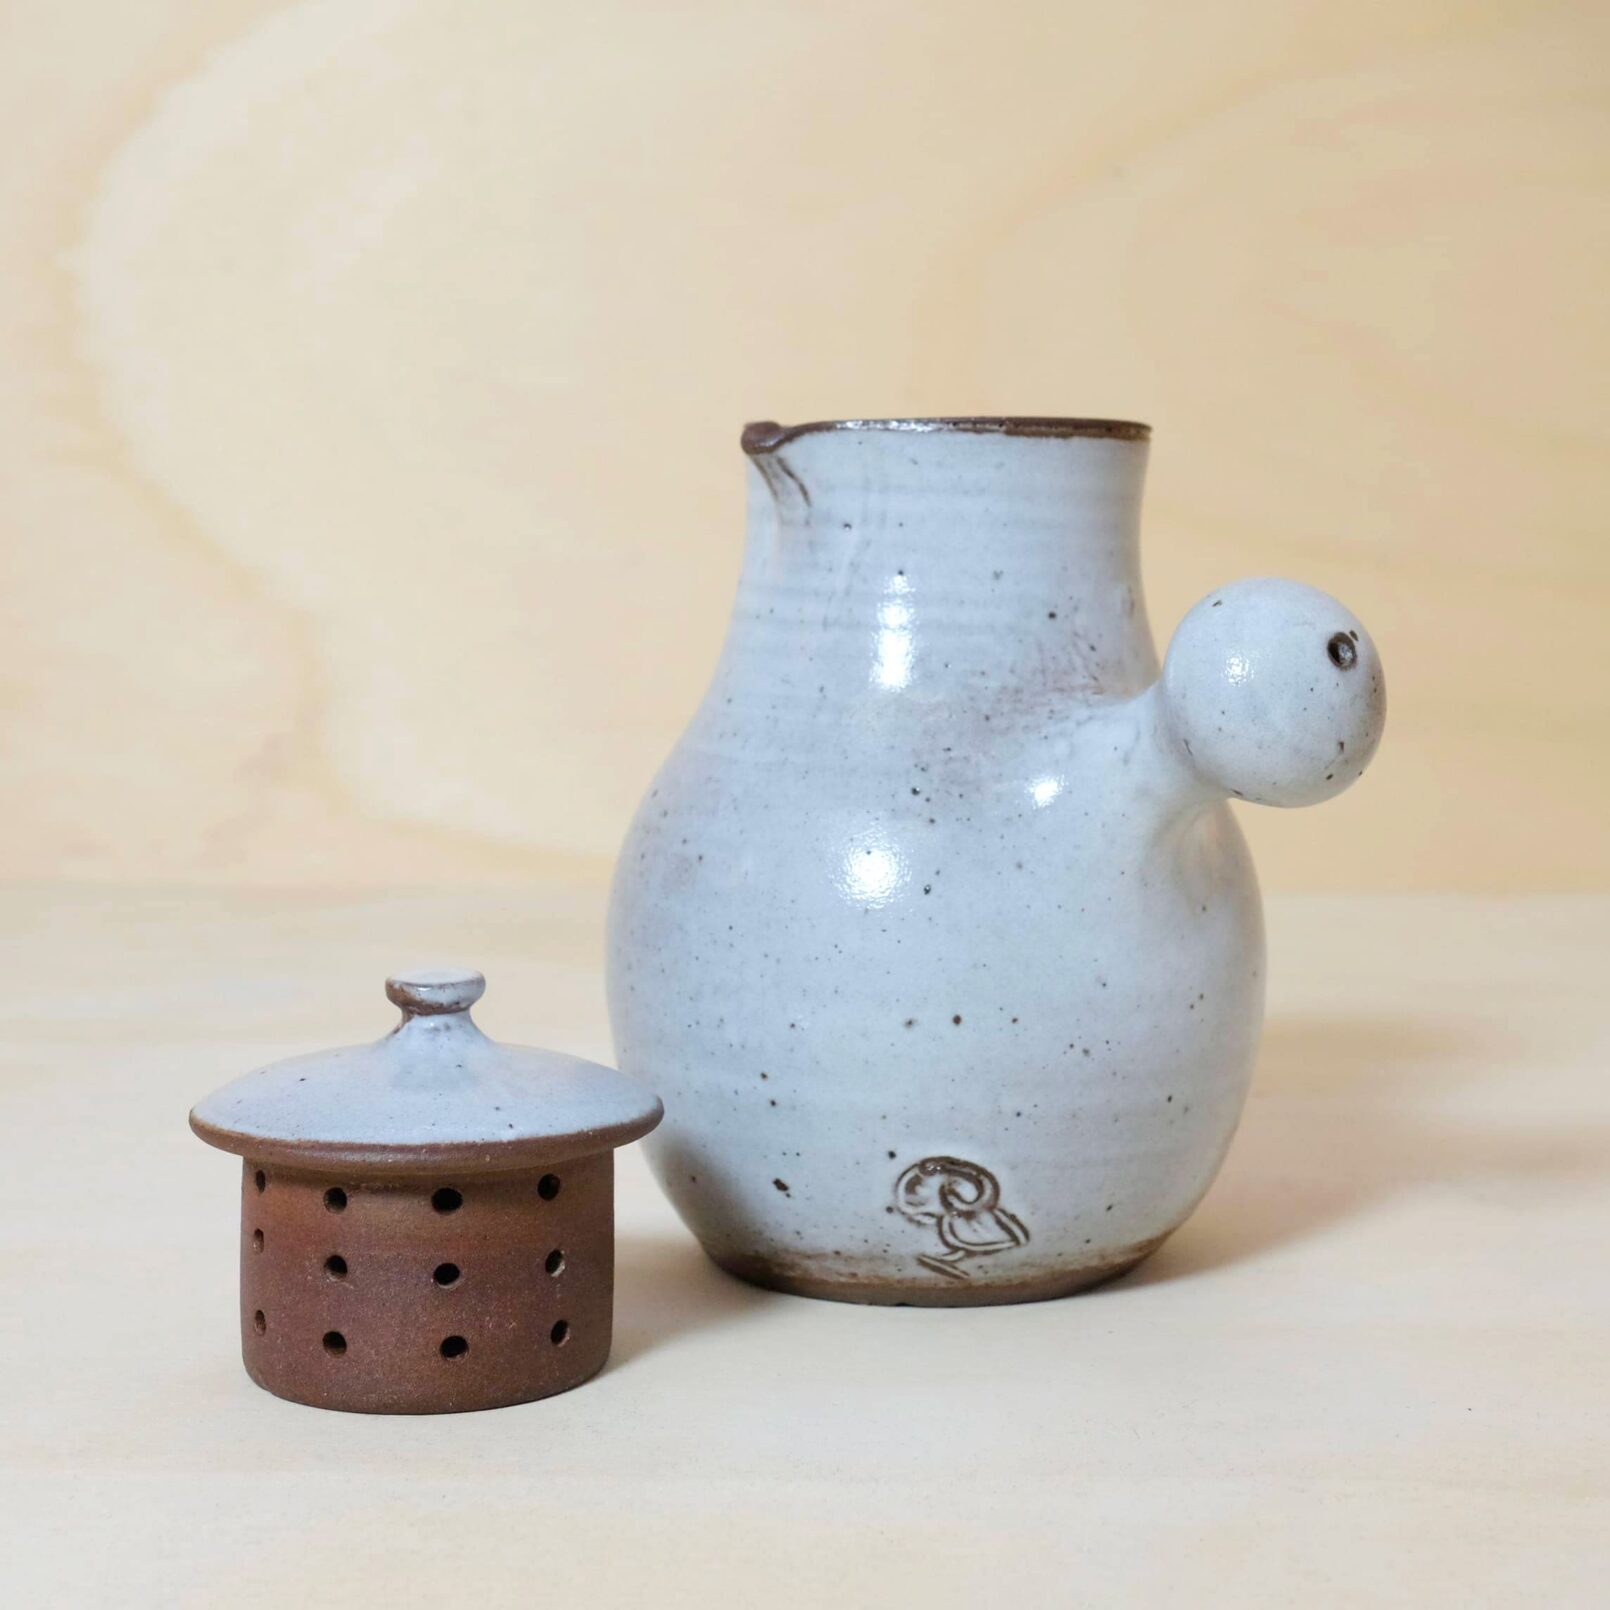 Jeanne and Norbert Pierlot, enameled stoneware teapot, 26 cm.